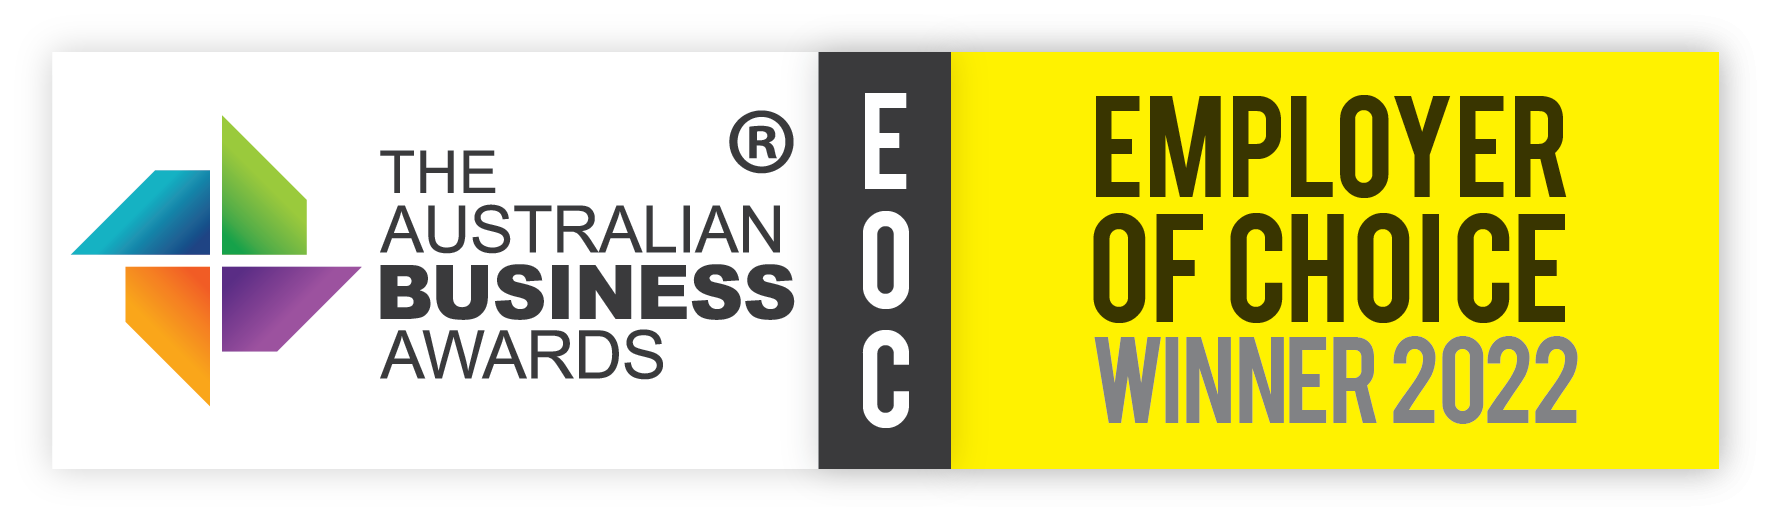 Winner for Employer of Choice in The Australian Business Awards 2022.